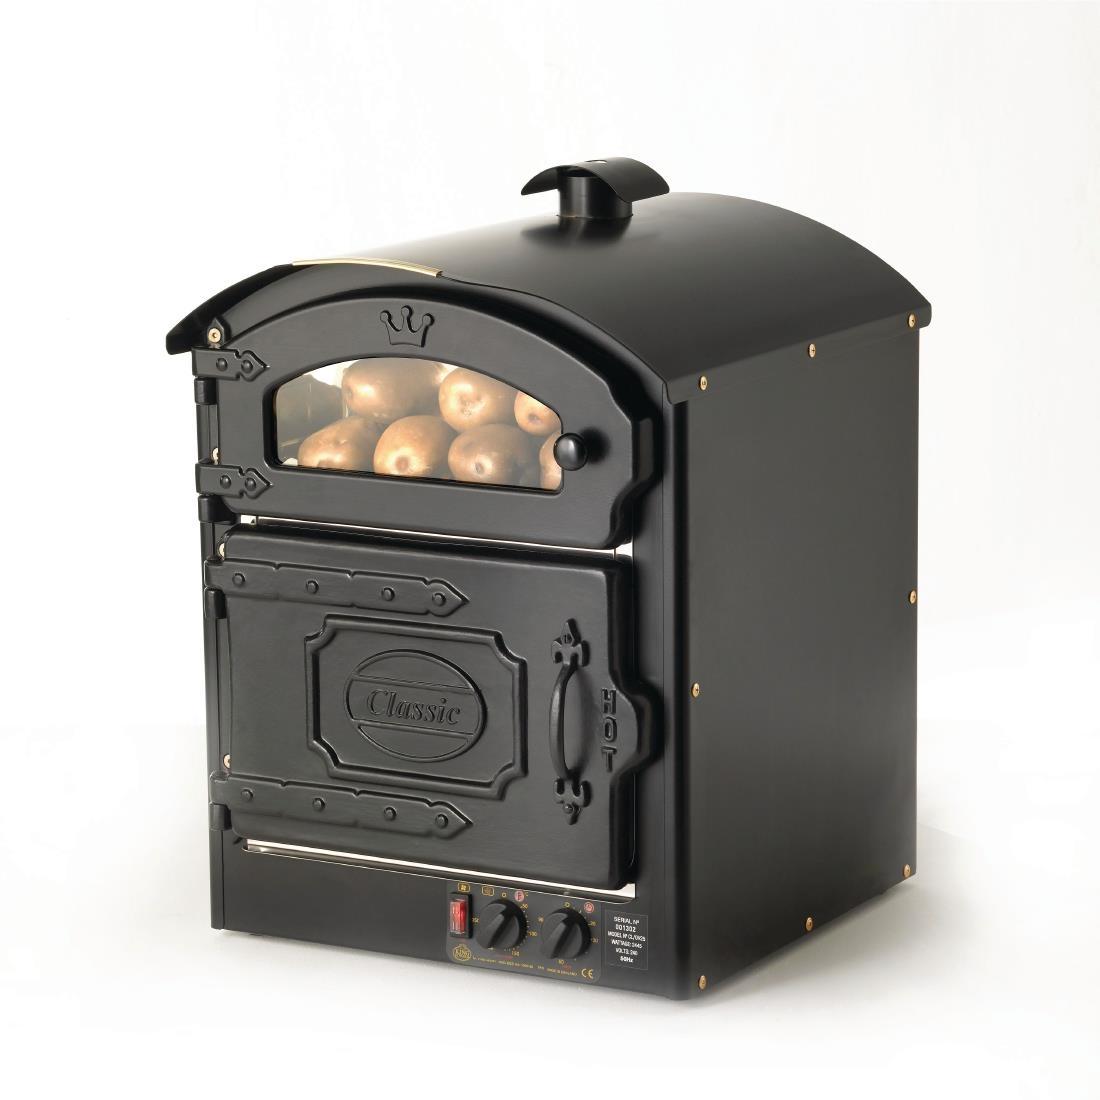 King Edward Classic 25 Potato Oven Black CLASS25/BLK - GP262  - 1